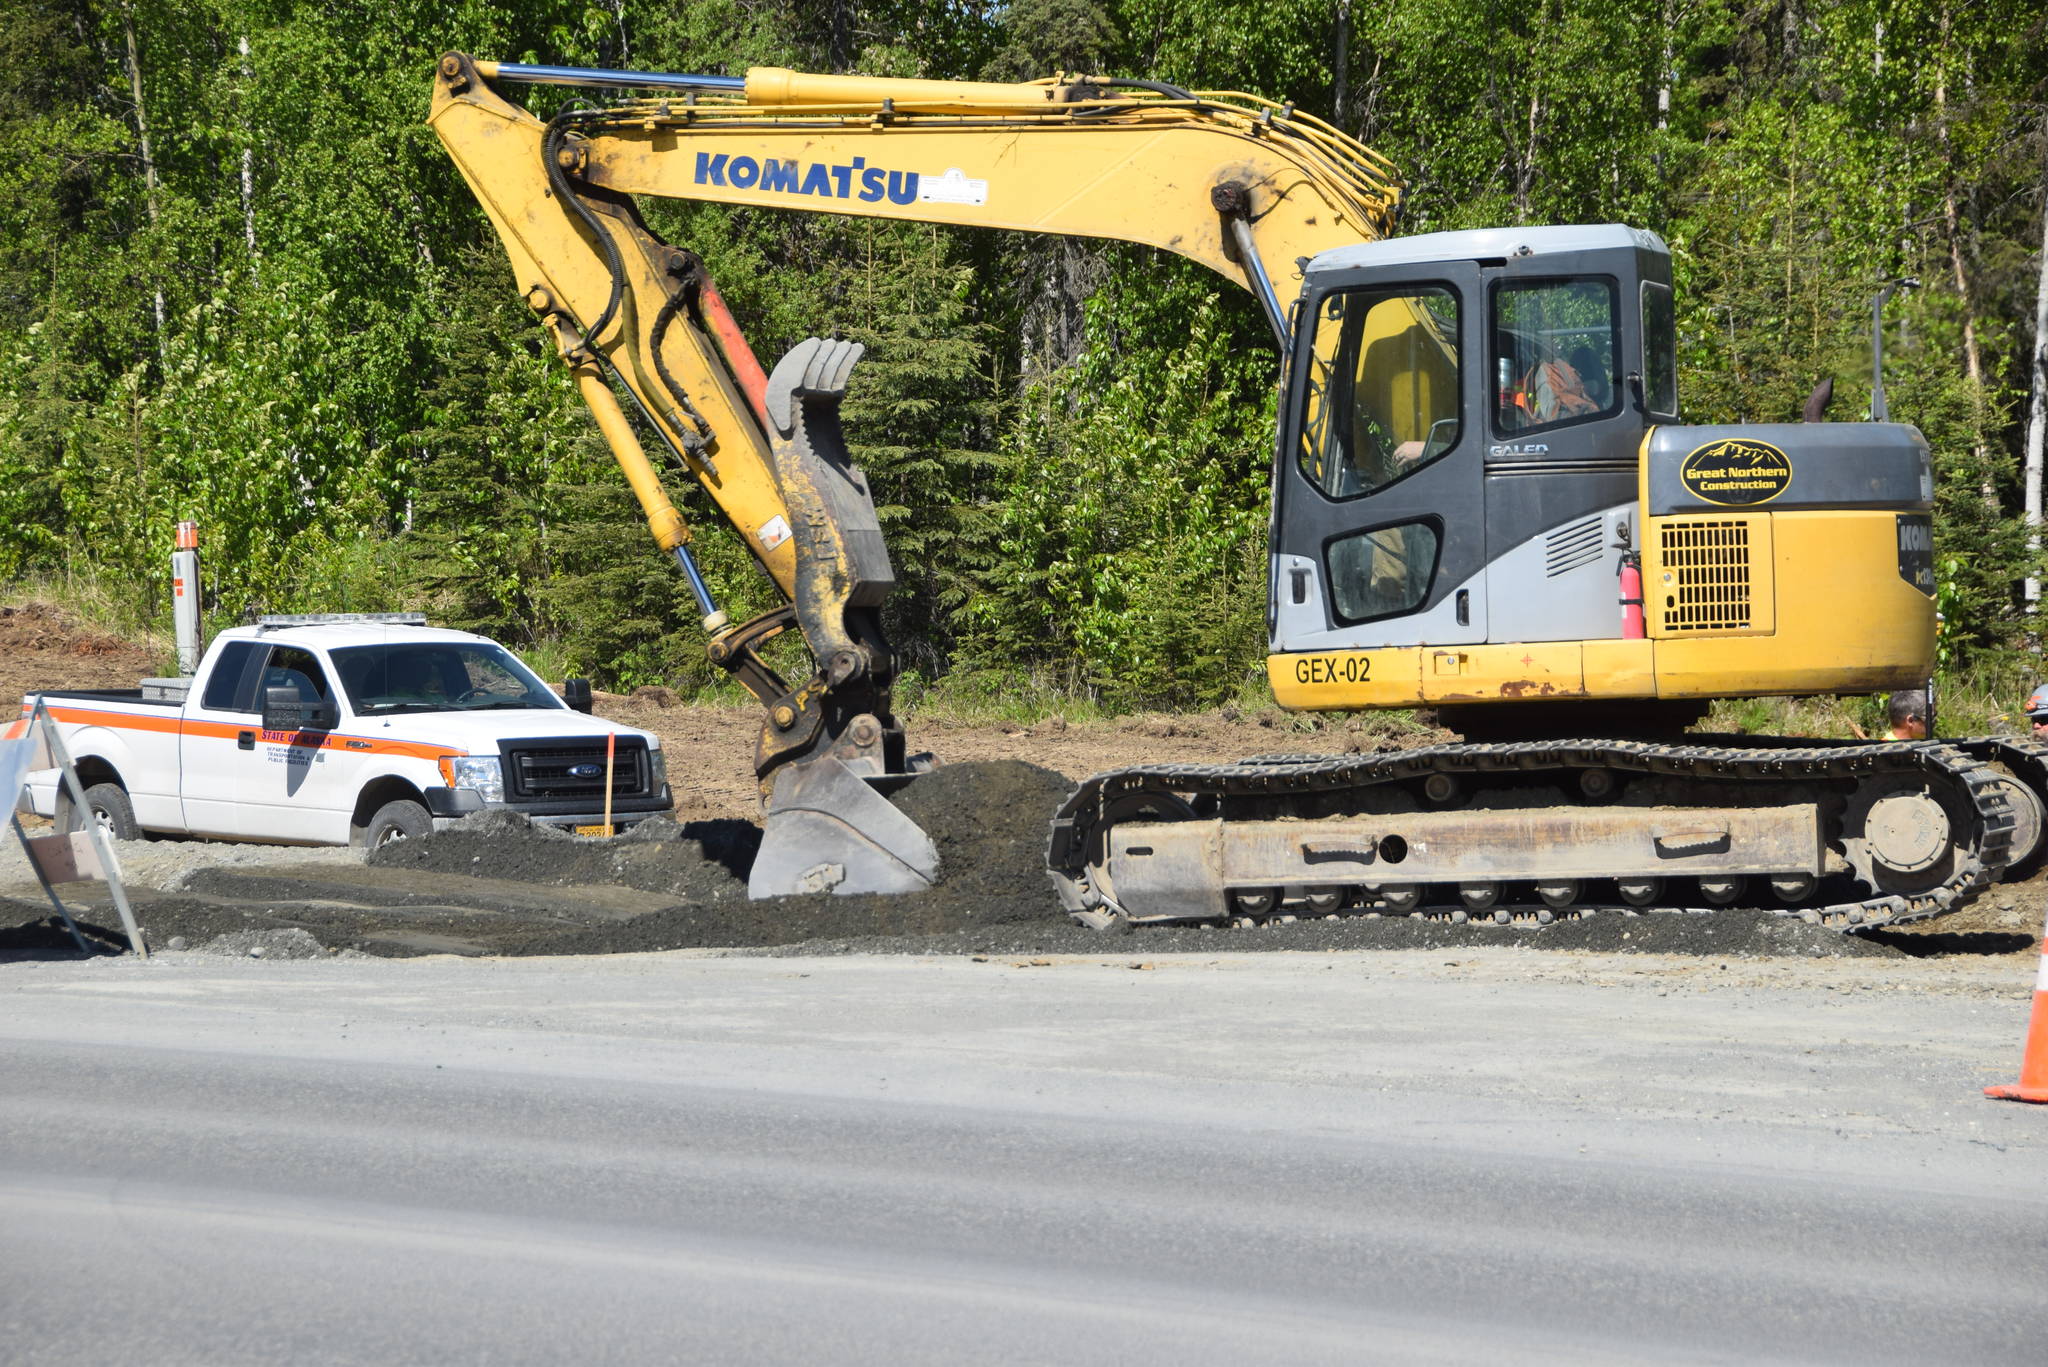 A construction crew excavates along the Kenai Spur Highway in Kenai, Alaska on June 4, 2019. (Photo by Brian Mazurek/Peninsula Clarion)